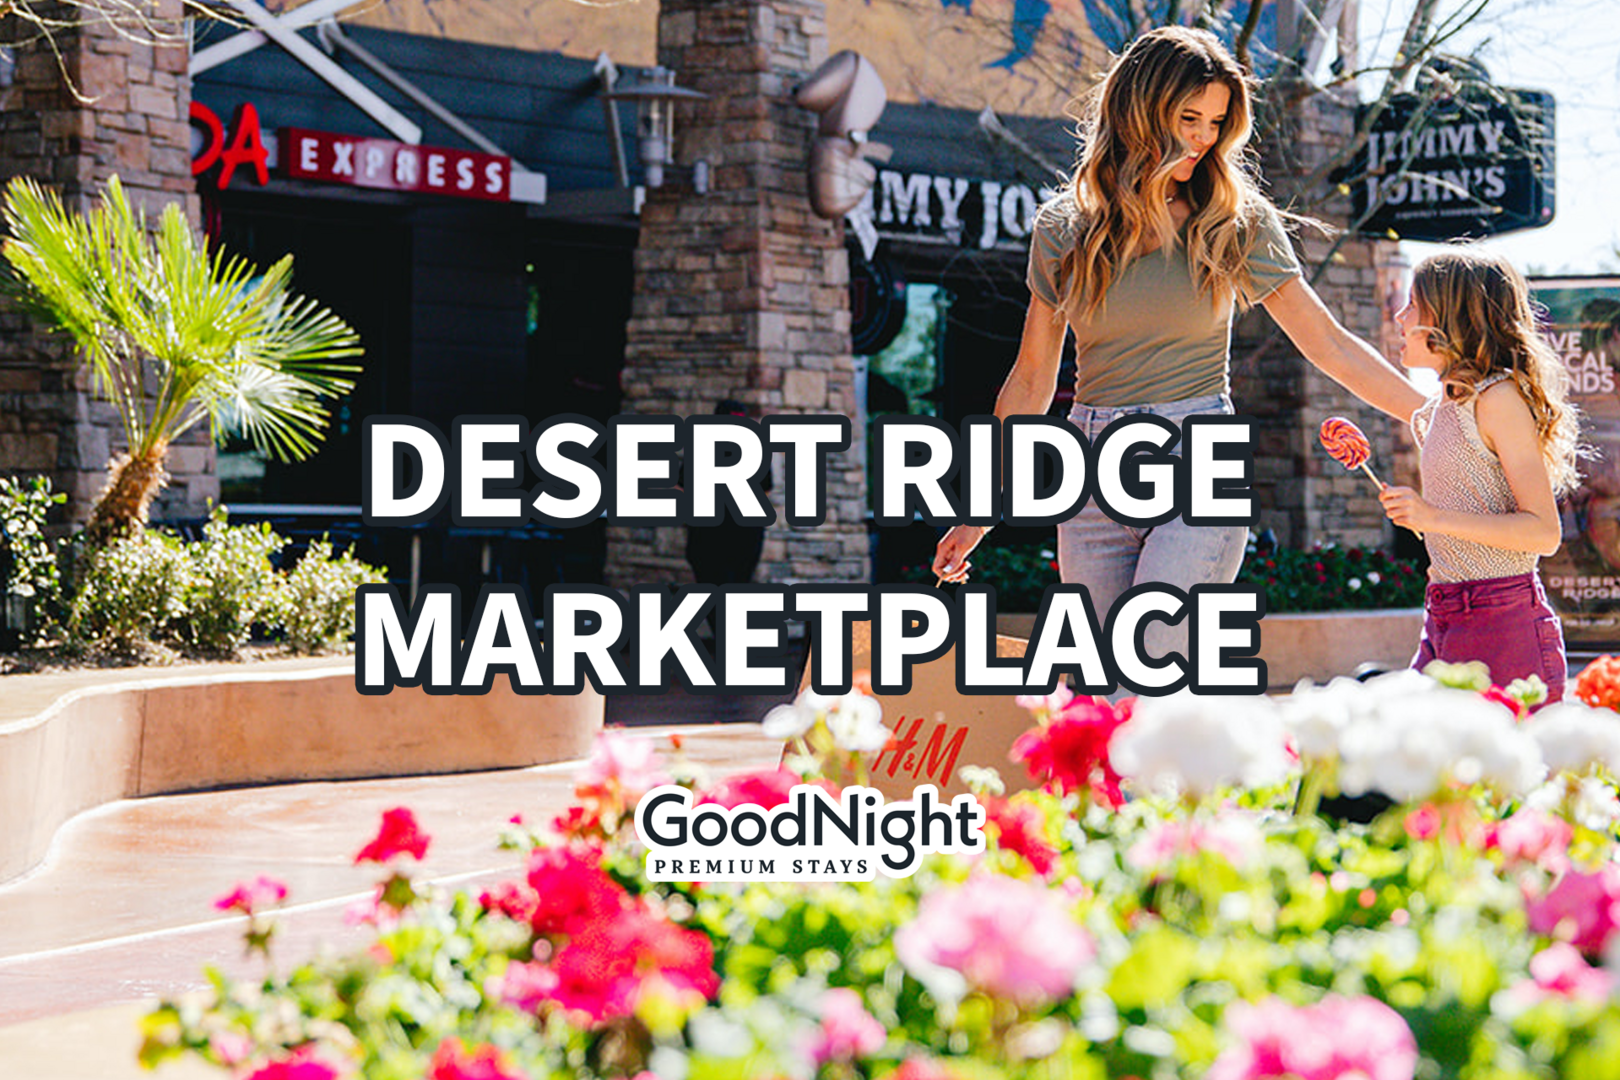 Desert Ridge Marketplace: 19 mins